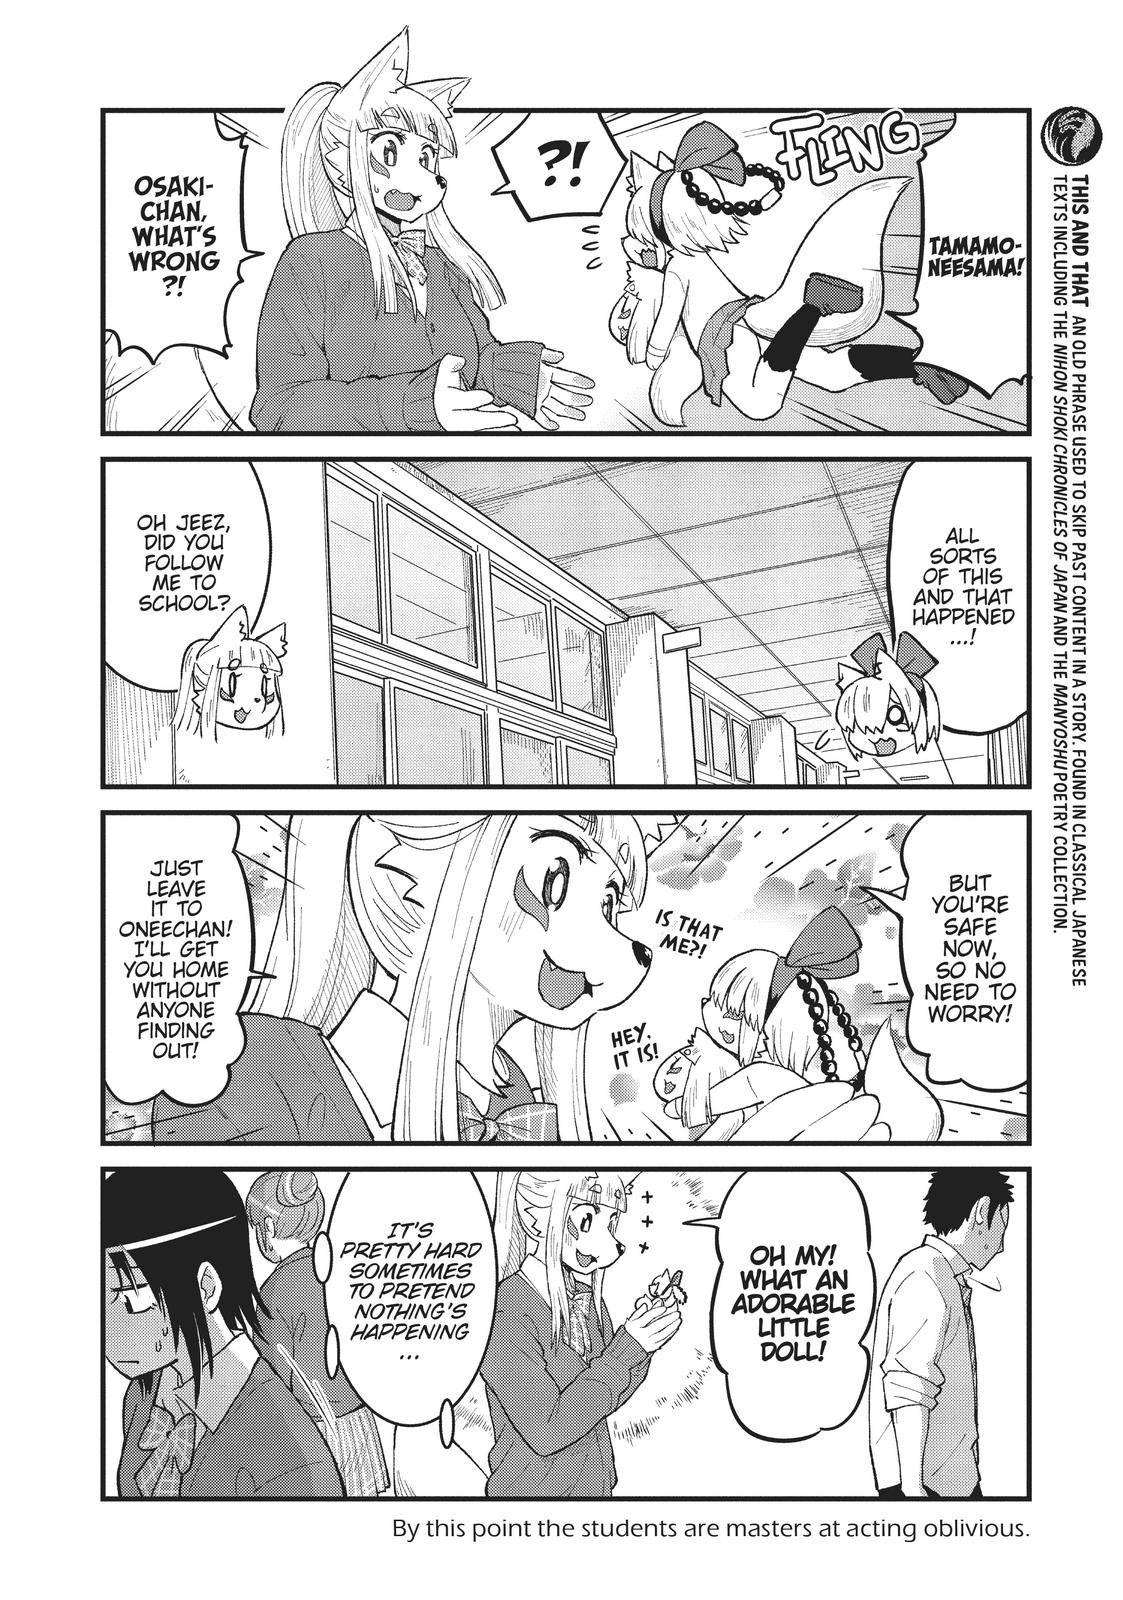 Tamamo-chan's a Fox! - chapter 41 - #6